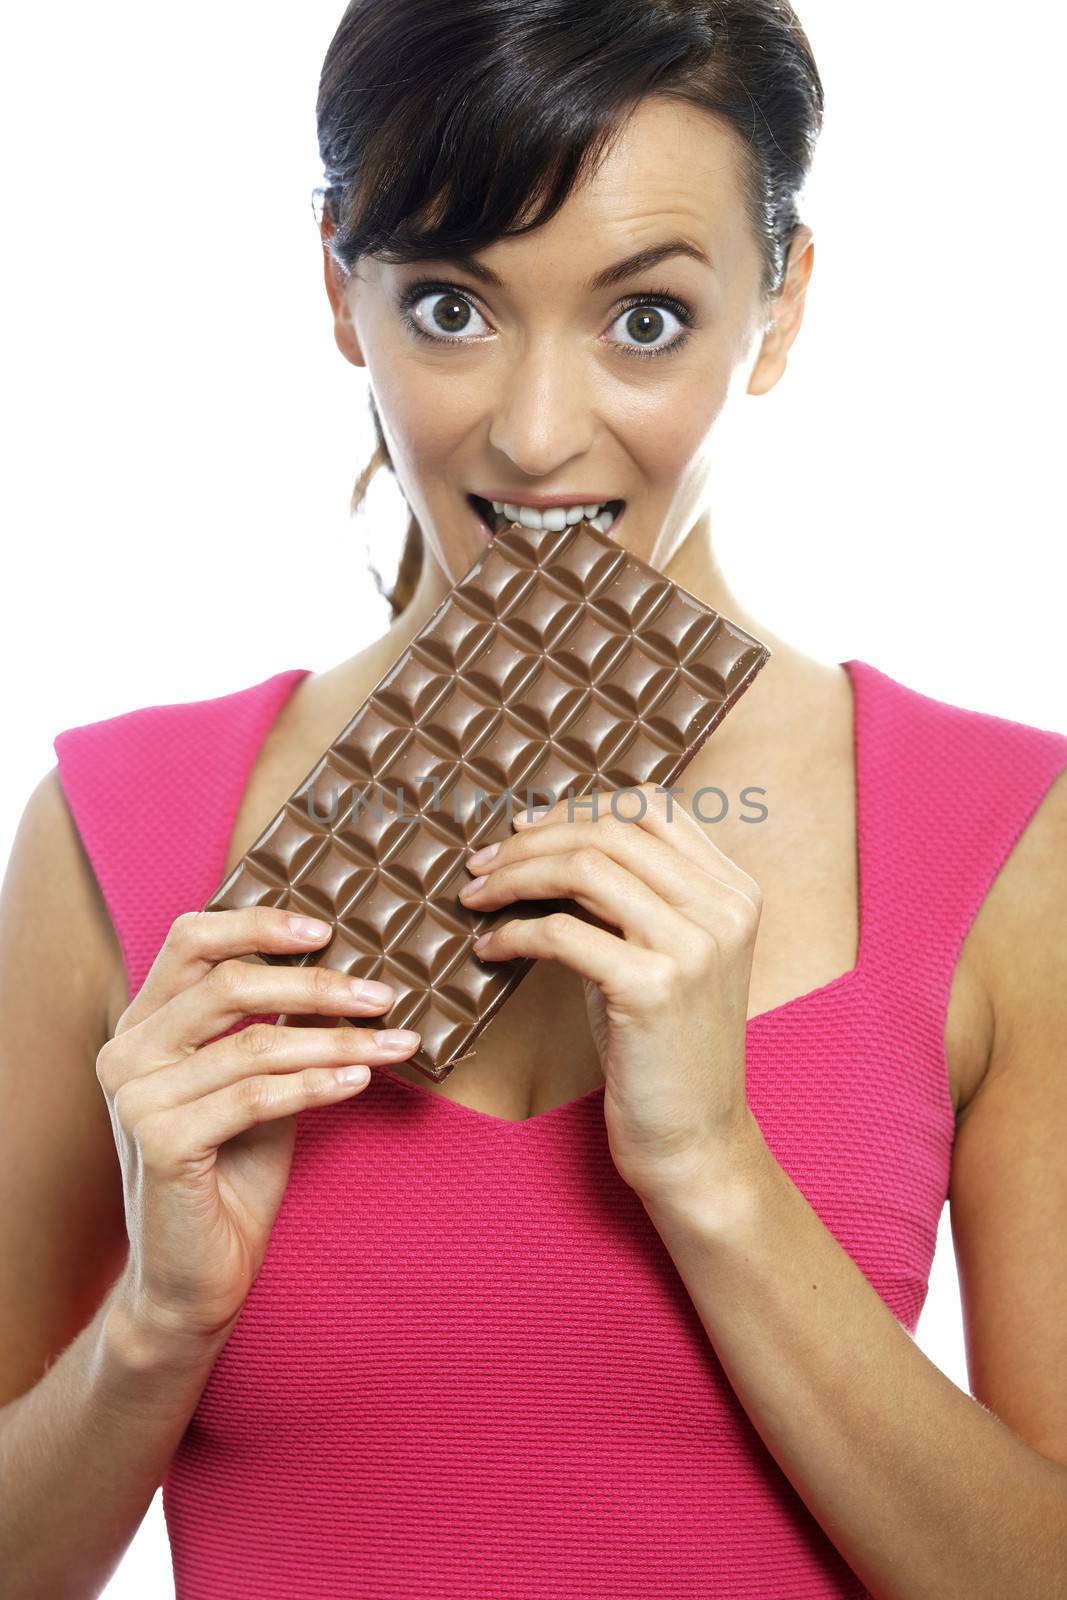 Woman eating chocolate bar by studiofi